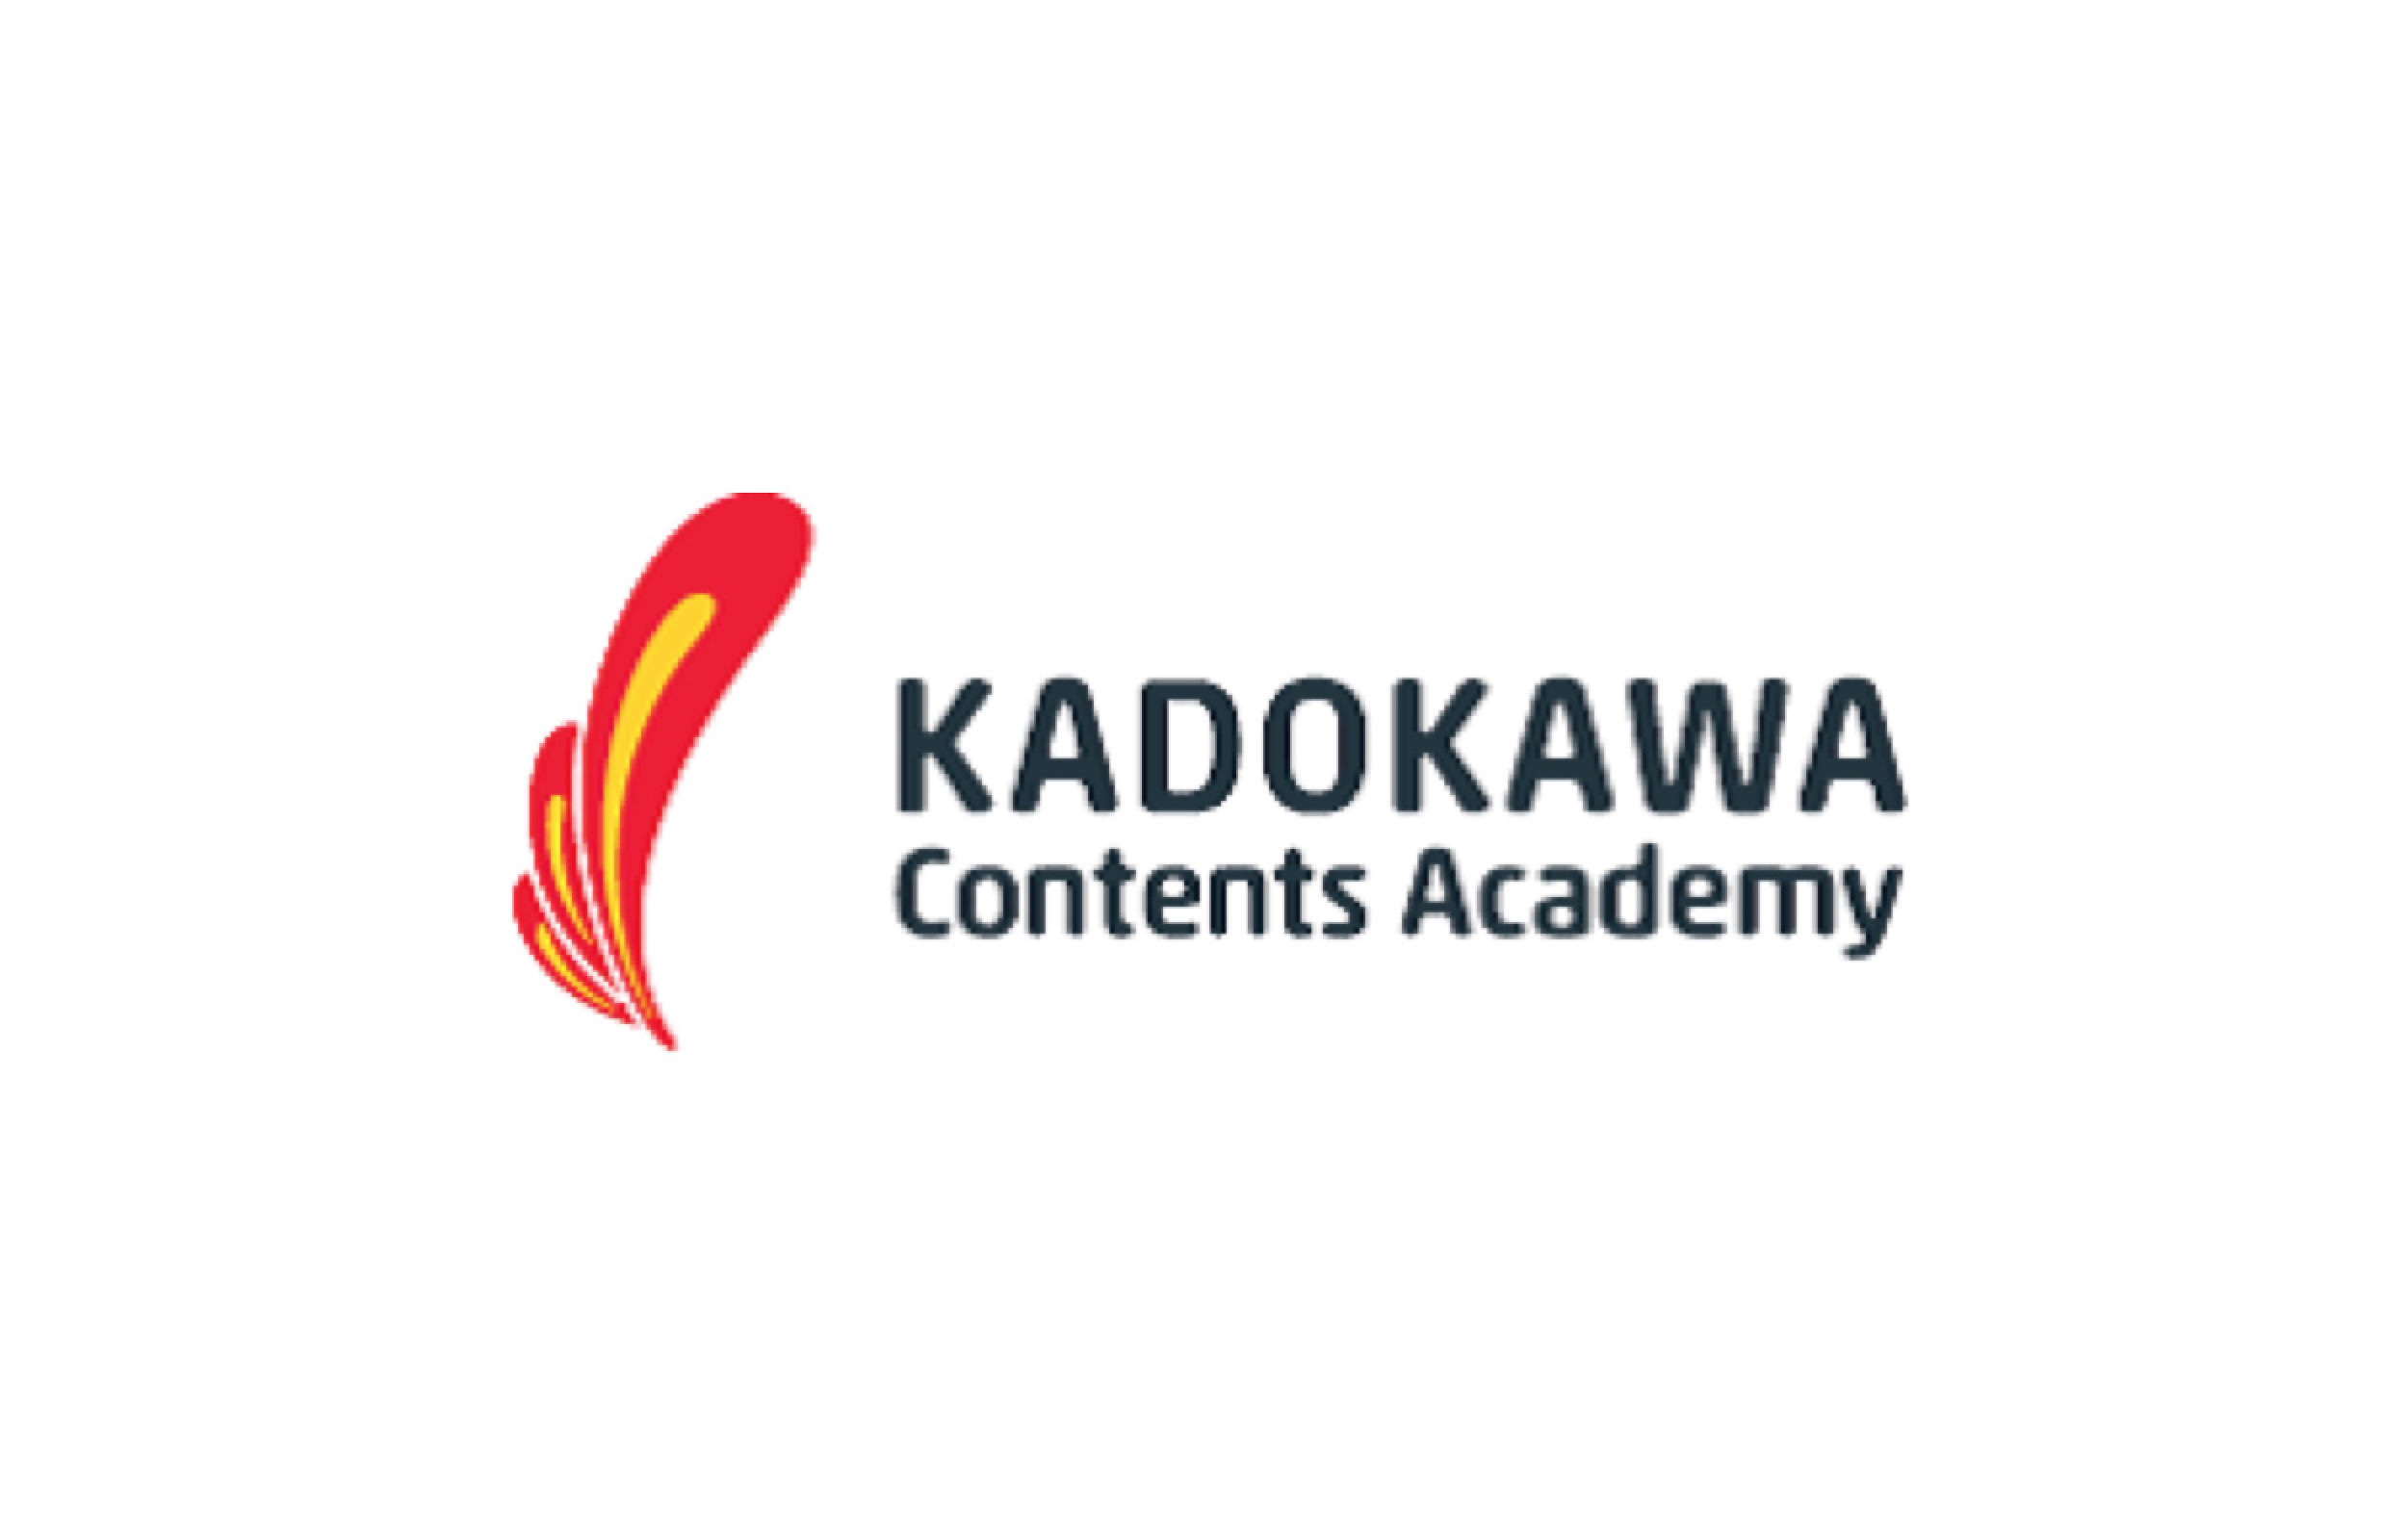 KADOKAWA Contents Academy